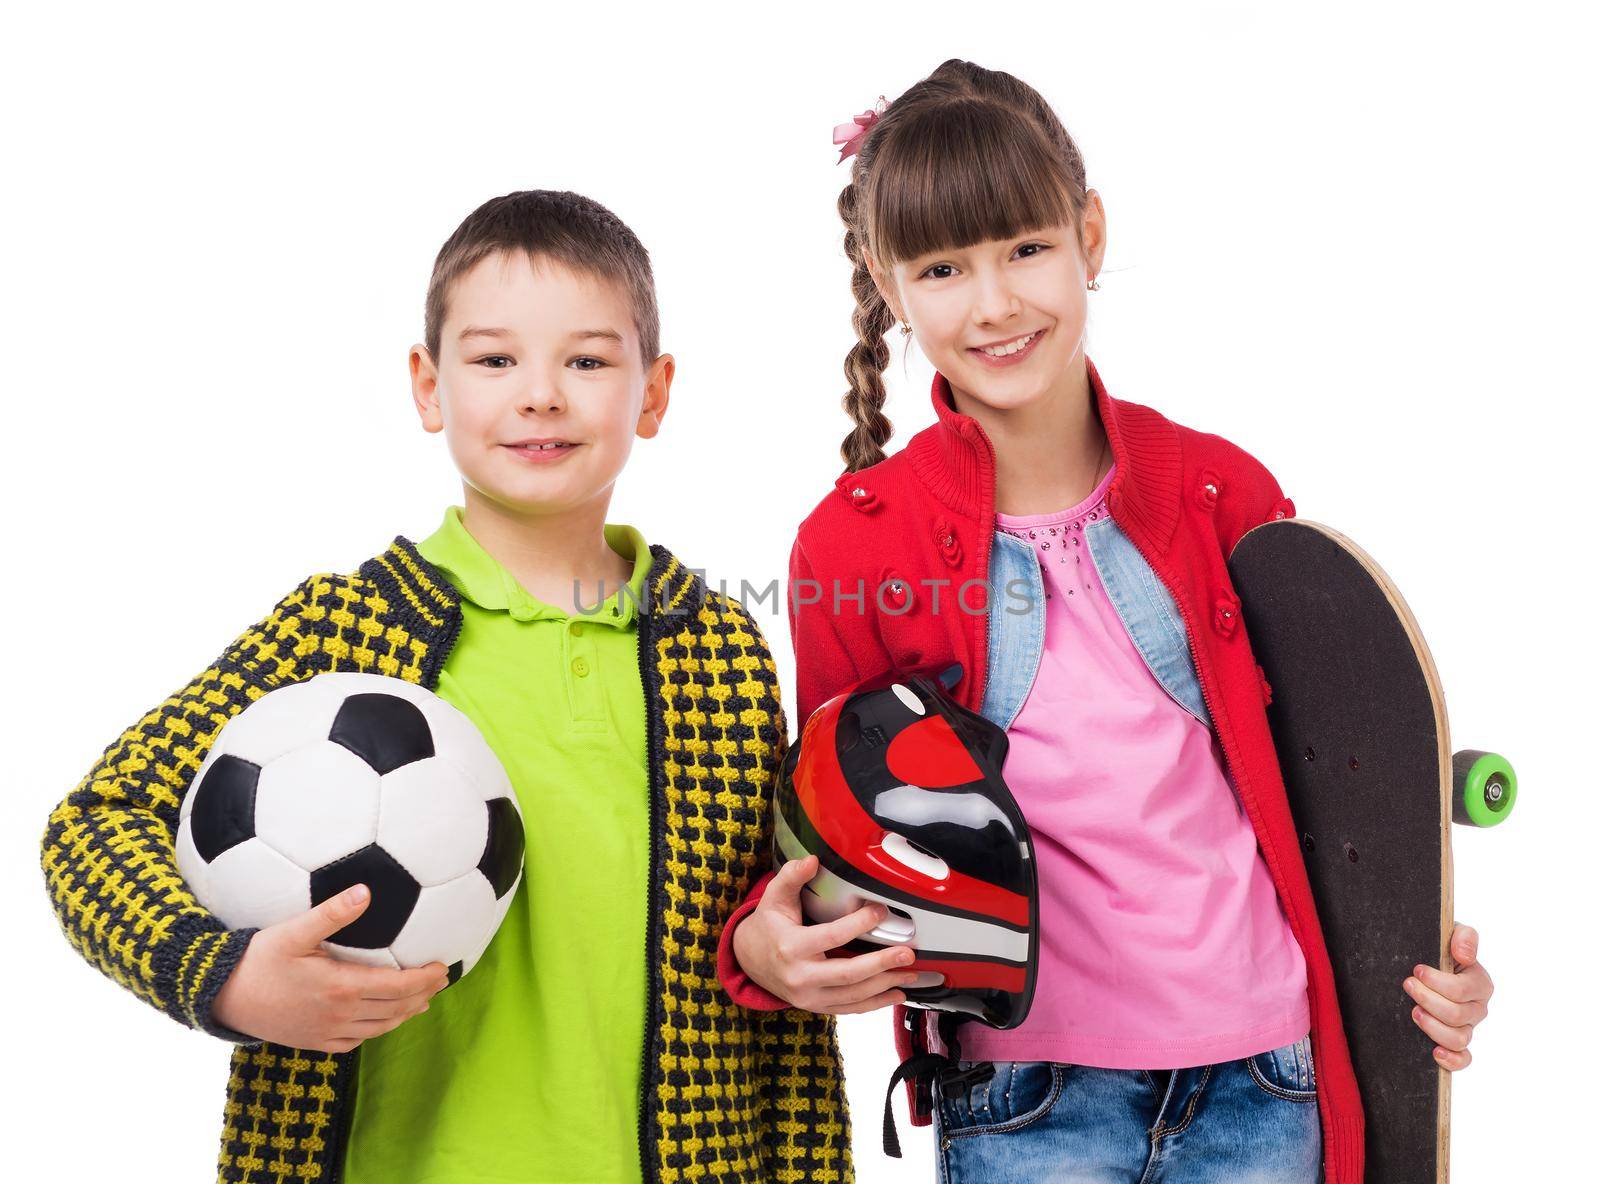 playful children holding sport equipment in hands by GekaSkr